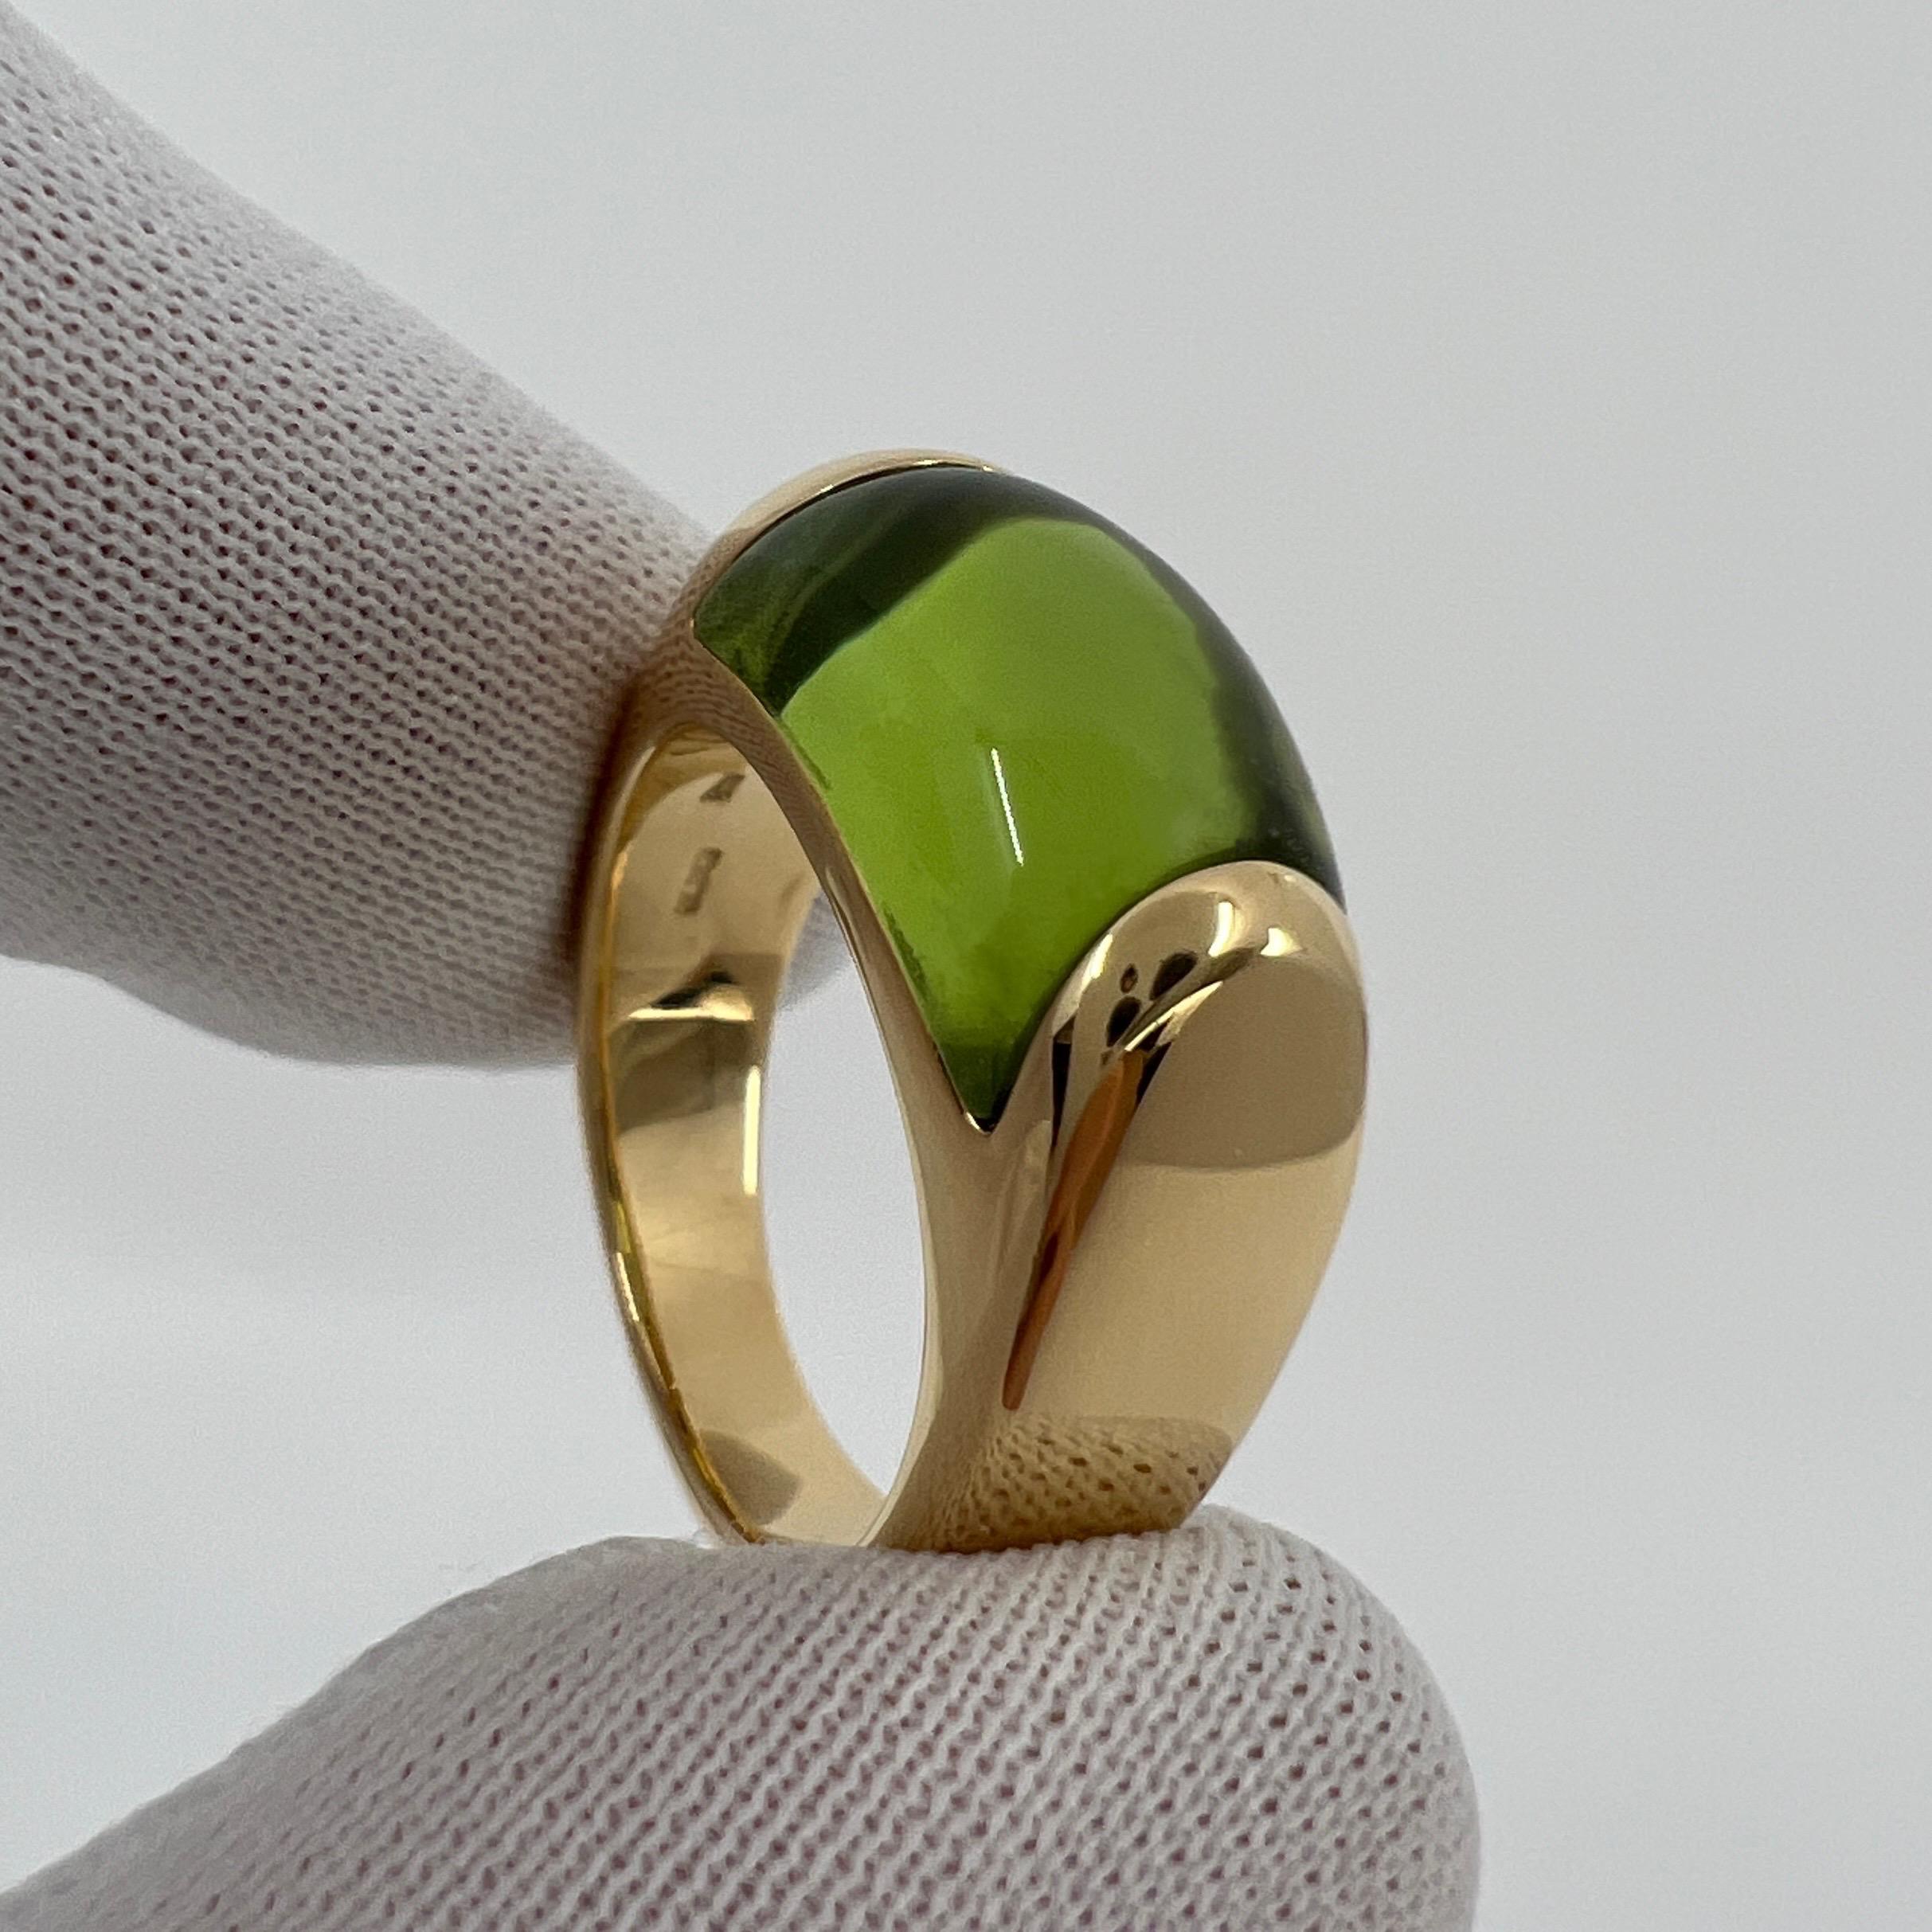 Rare Bvlgari Bulgari Tronchetto 18k Yellow Gold Green Peridot Ring with Box 6